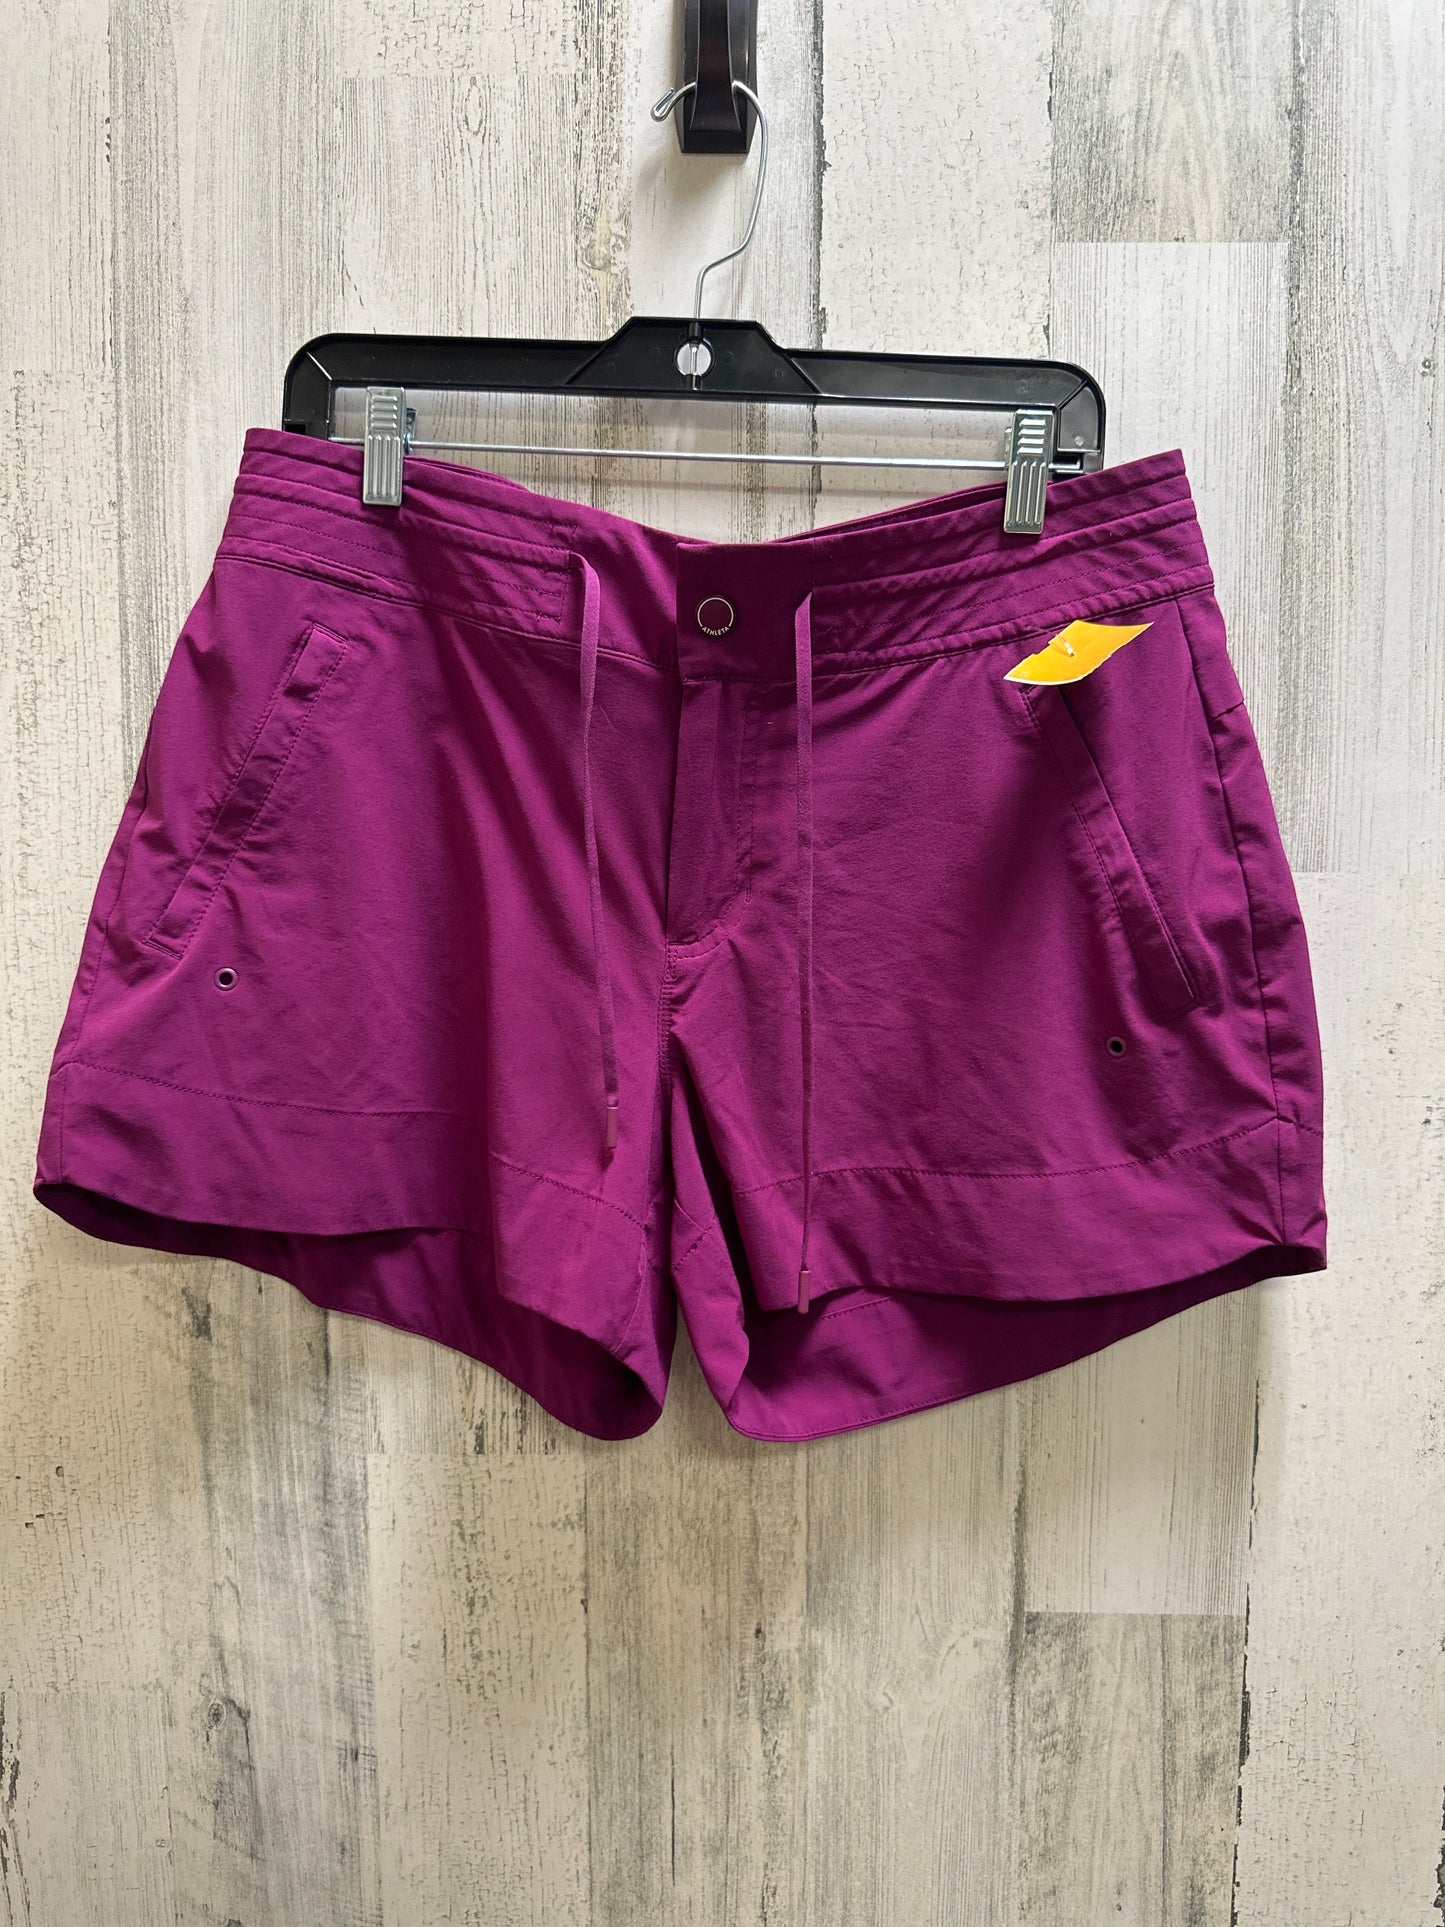 Purple Athletic Shorts Athleta, Size L